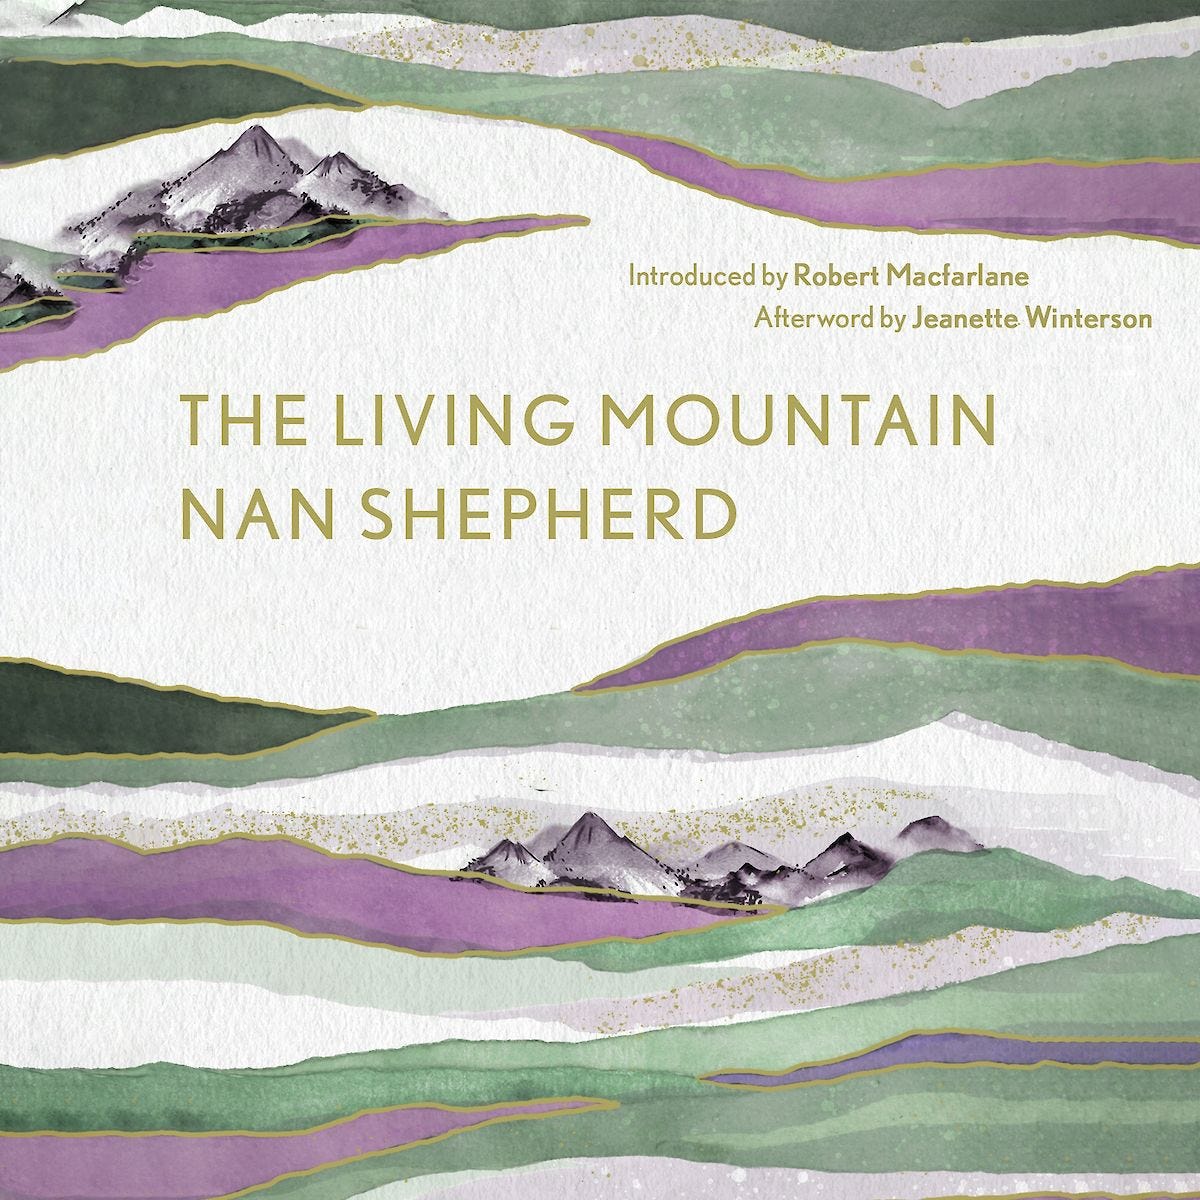 Nan Shepherd's The Living Mountain audiobook read by Tilda Swinton to ...